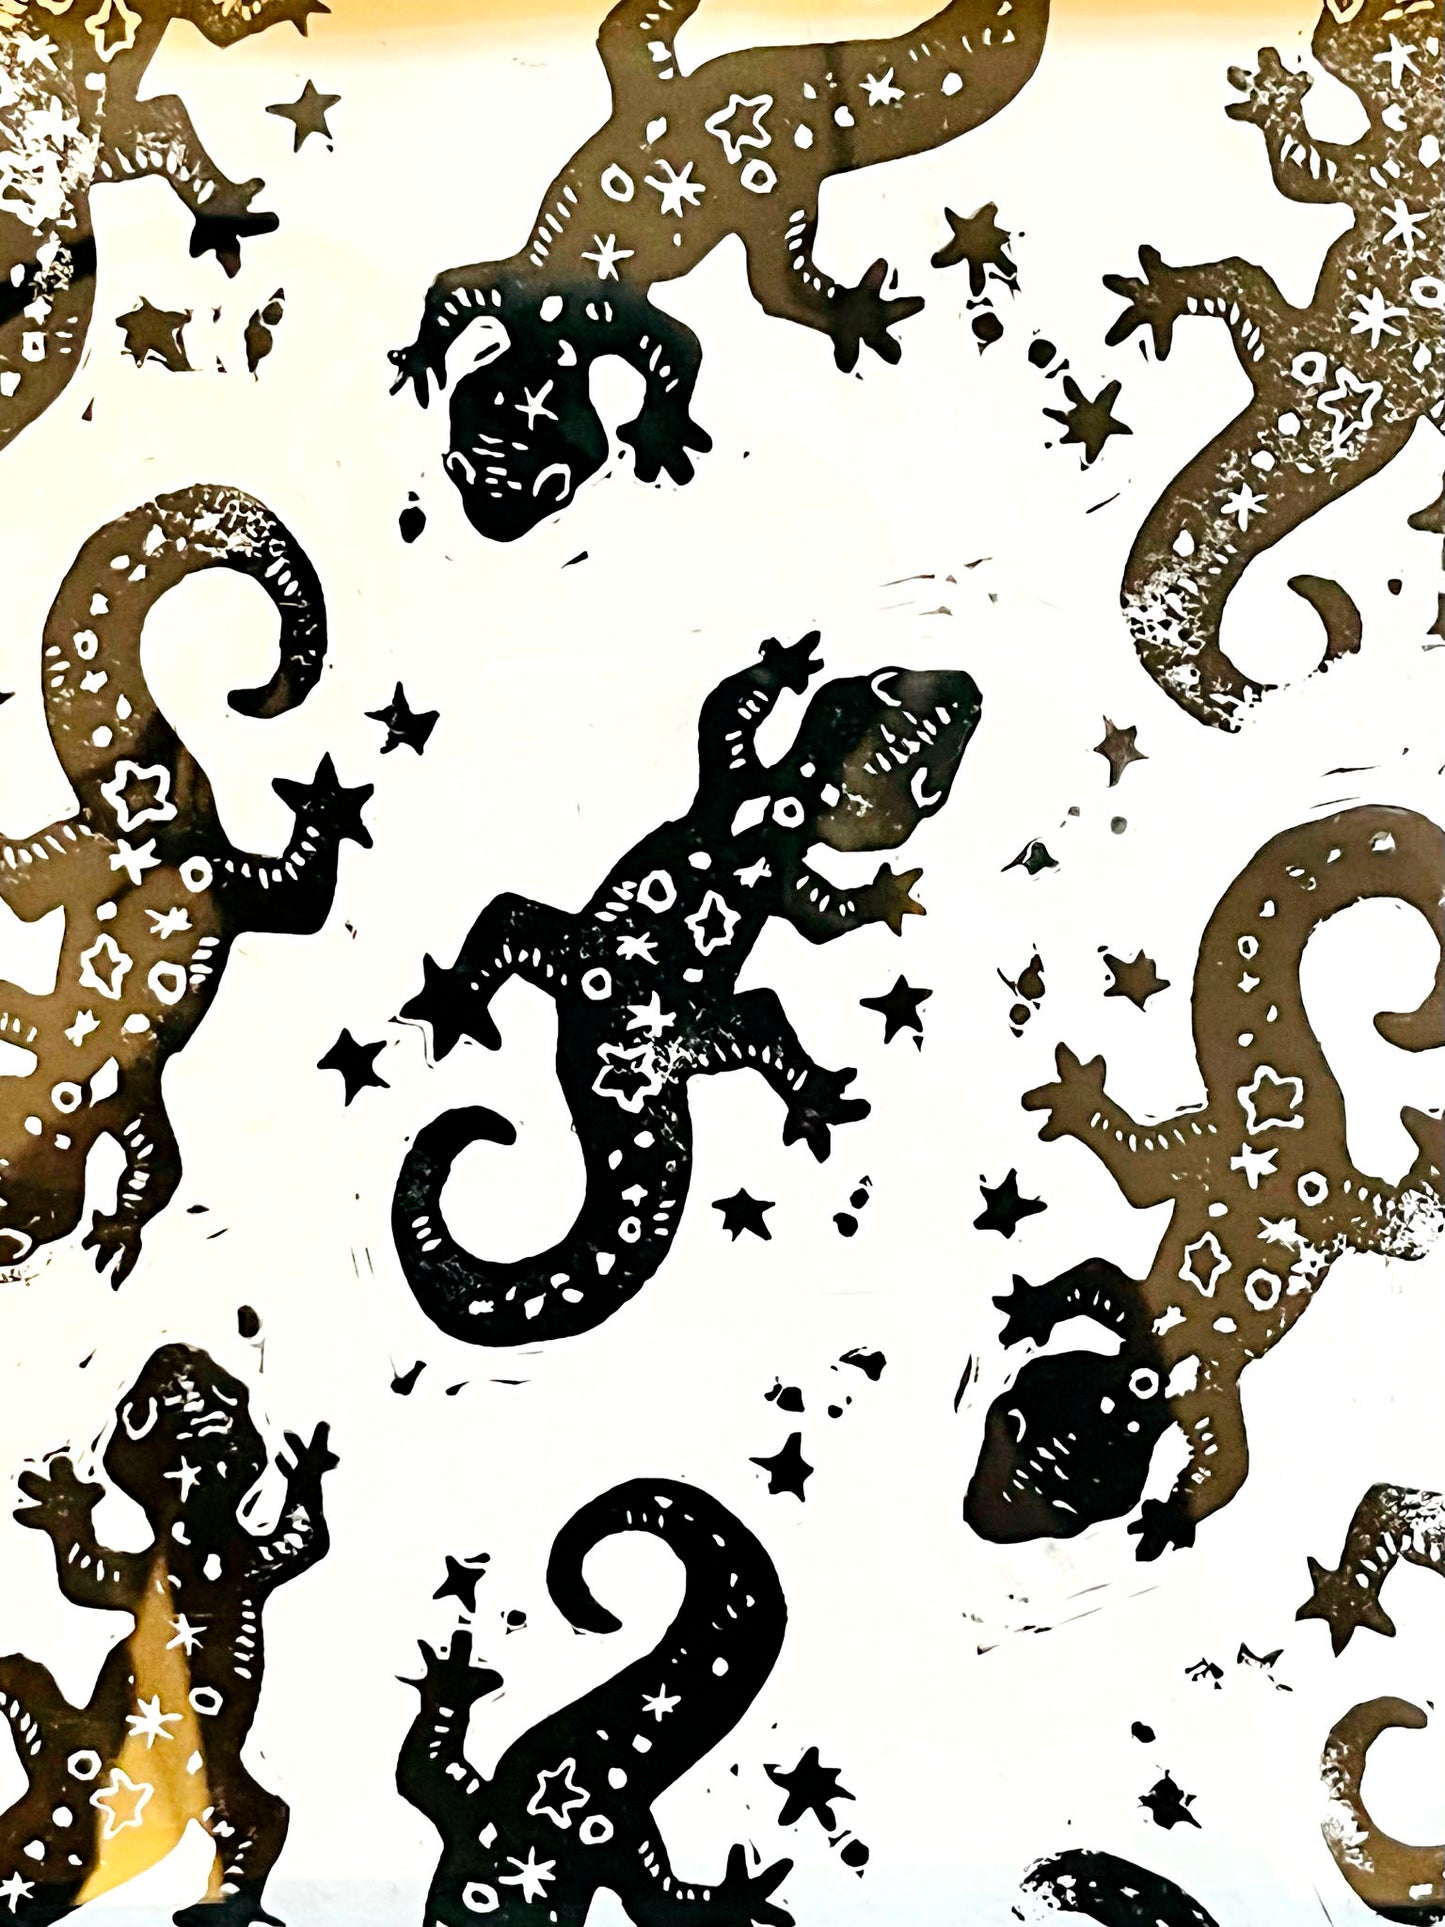 Salamander Constellation - Original Linocut